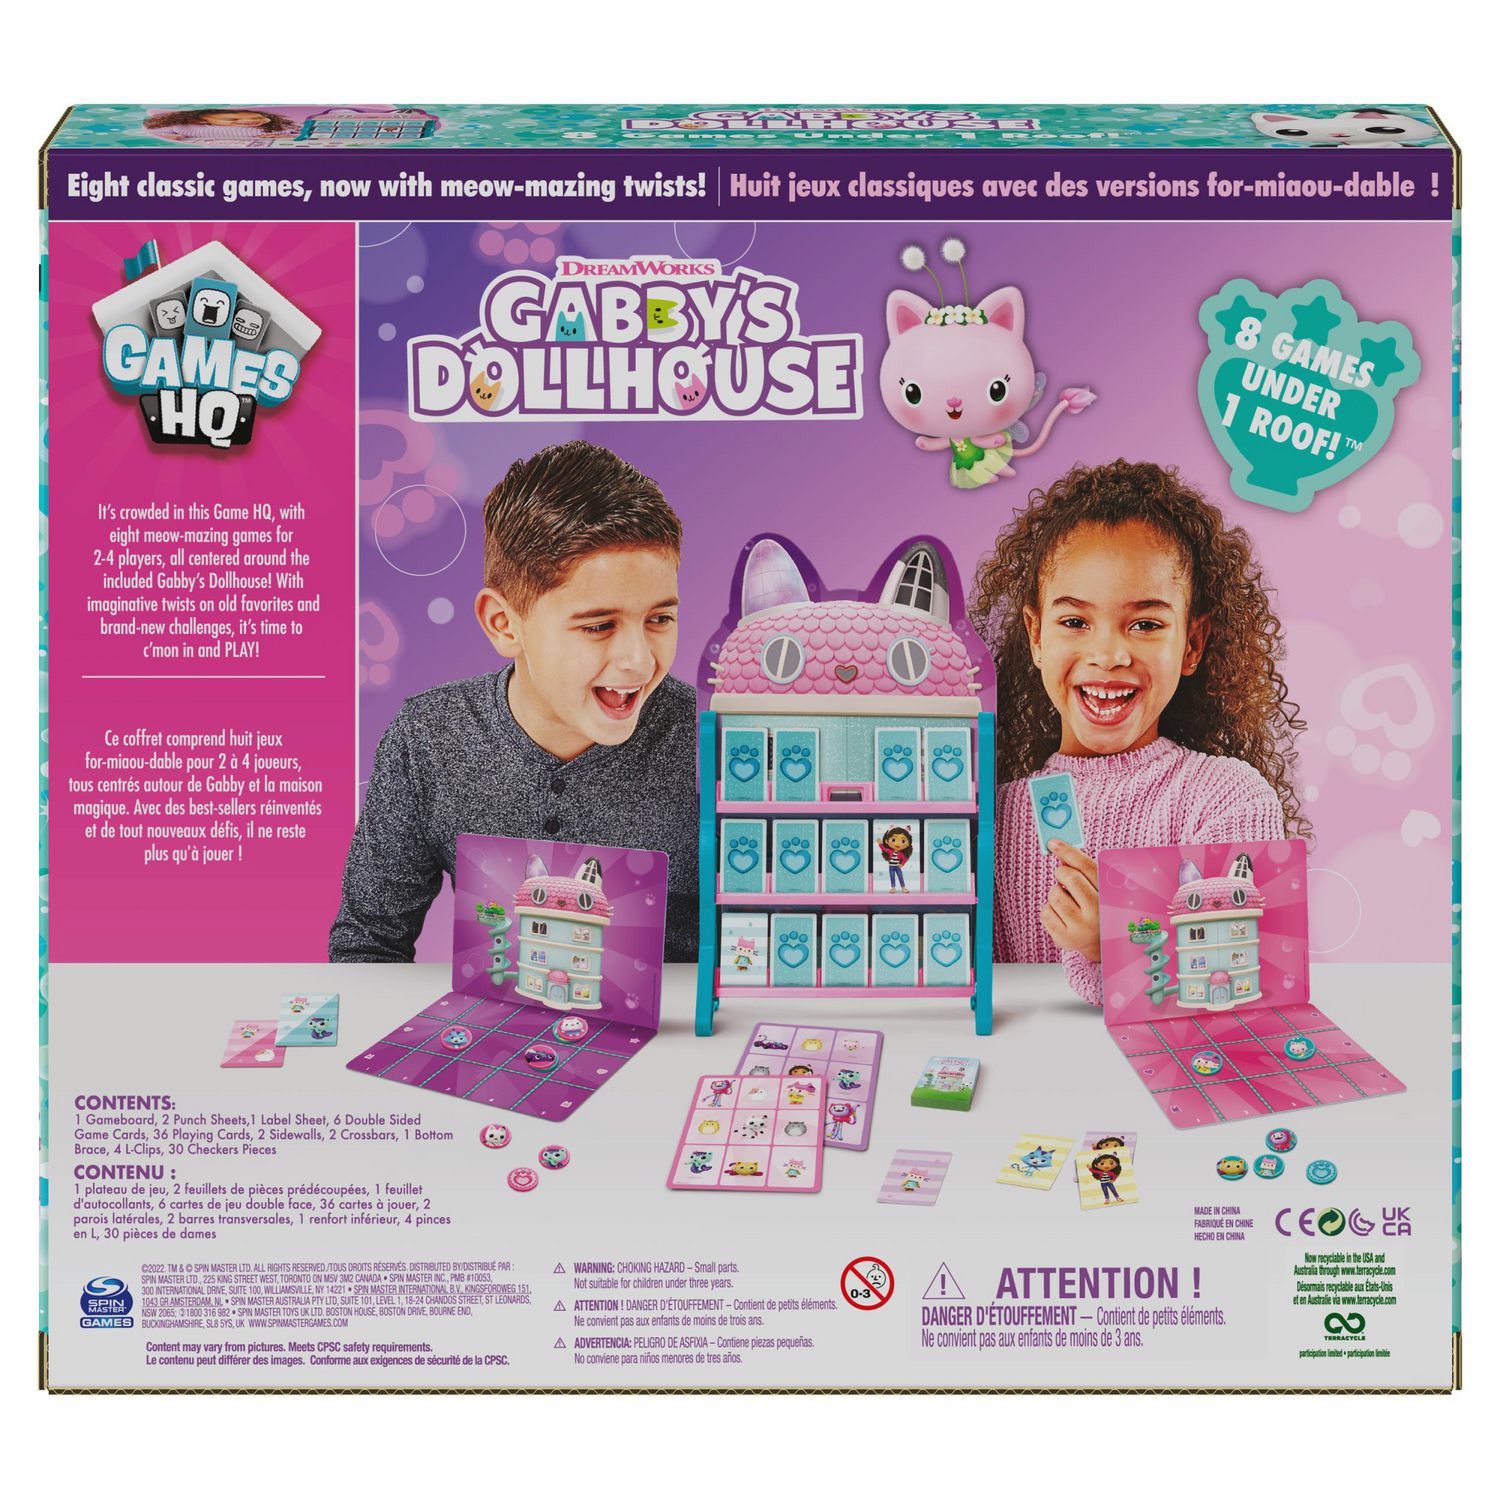 Gabby's Dollhouse, Games HQ Checkers Tic Tac Toe Memory Match Go